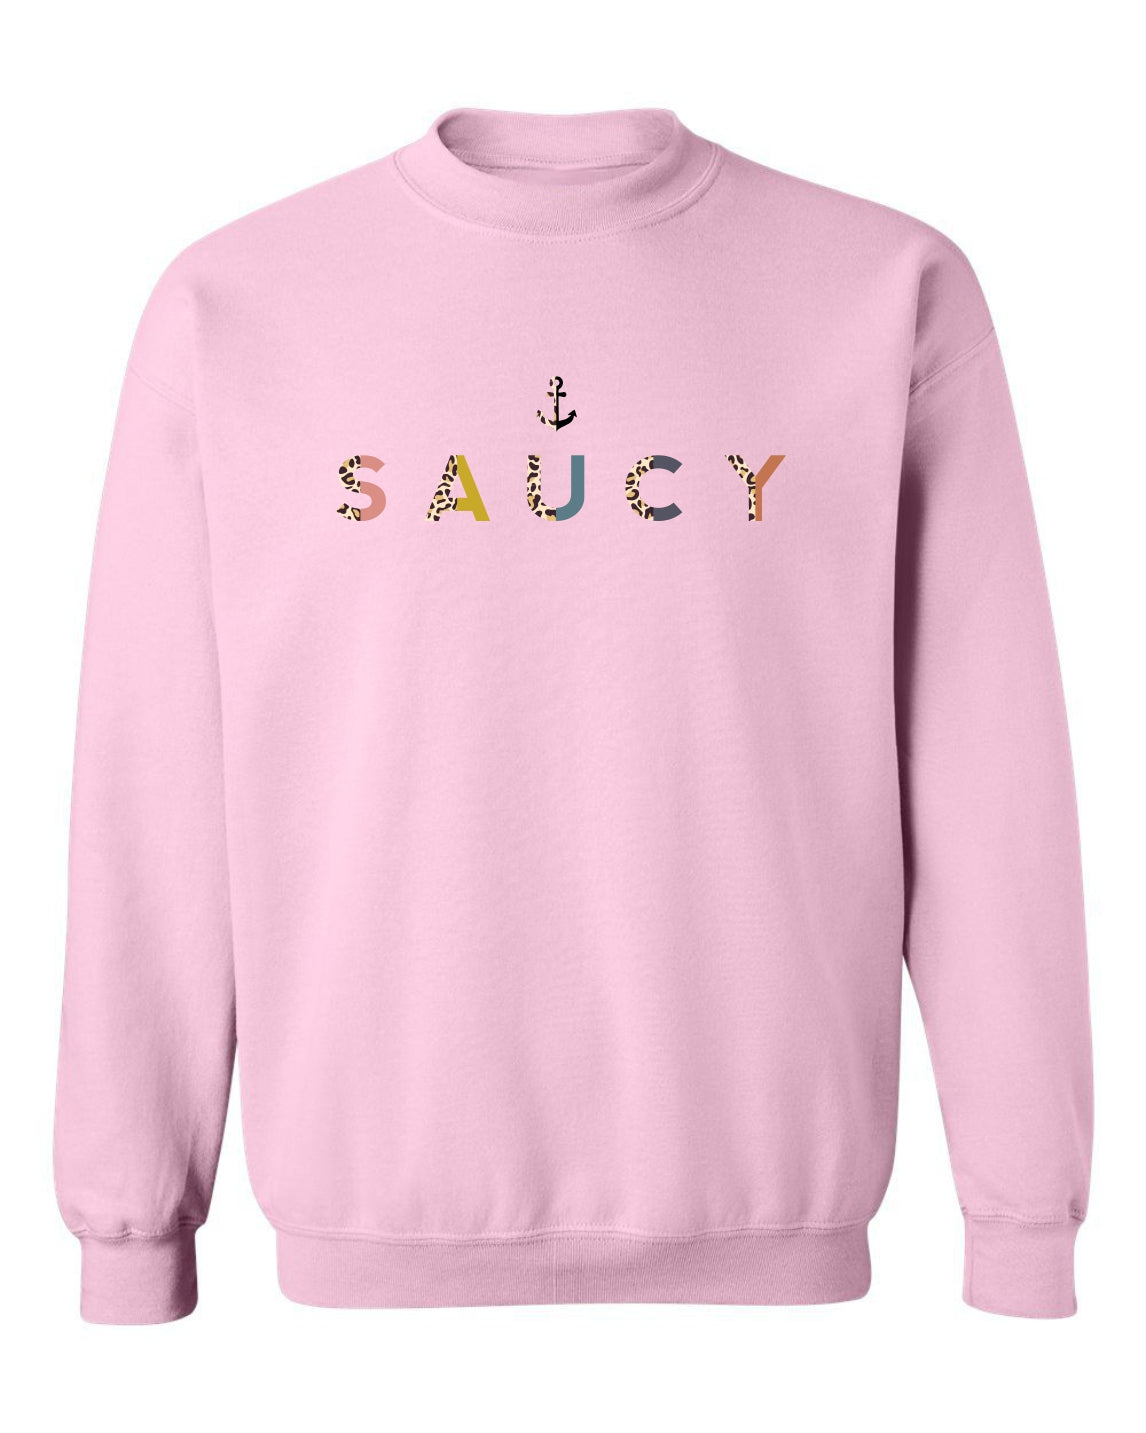 "Saucy" Cheetah Colour Split Unisex Crewneck Sweatshirt